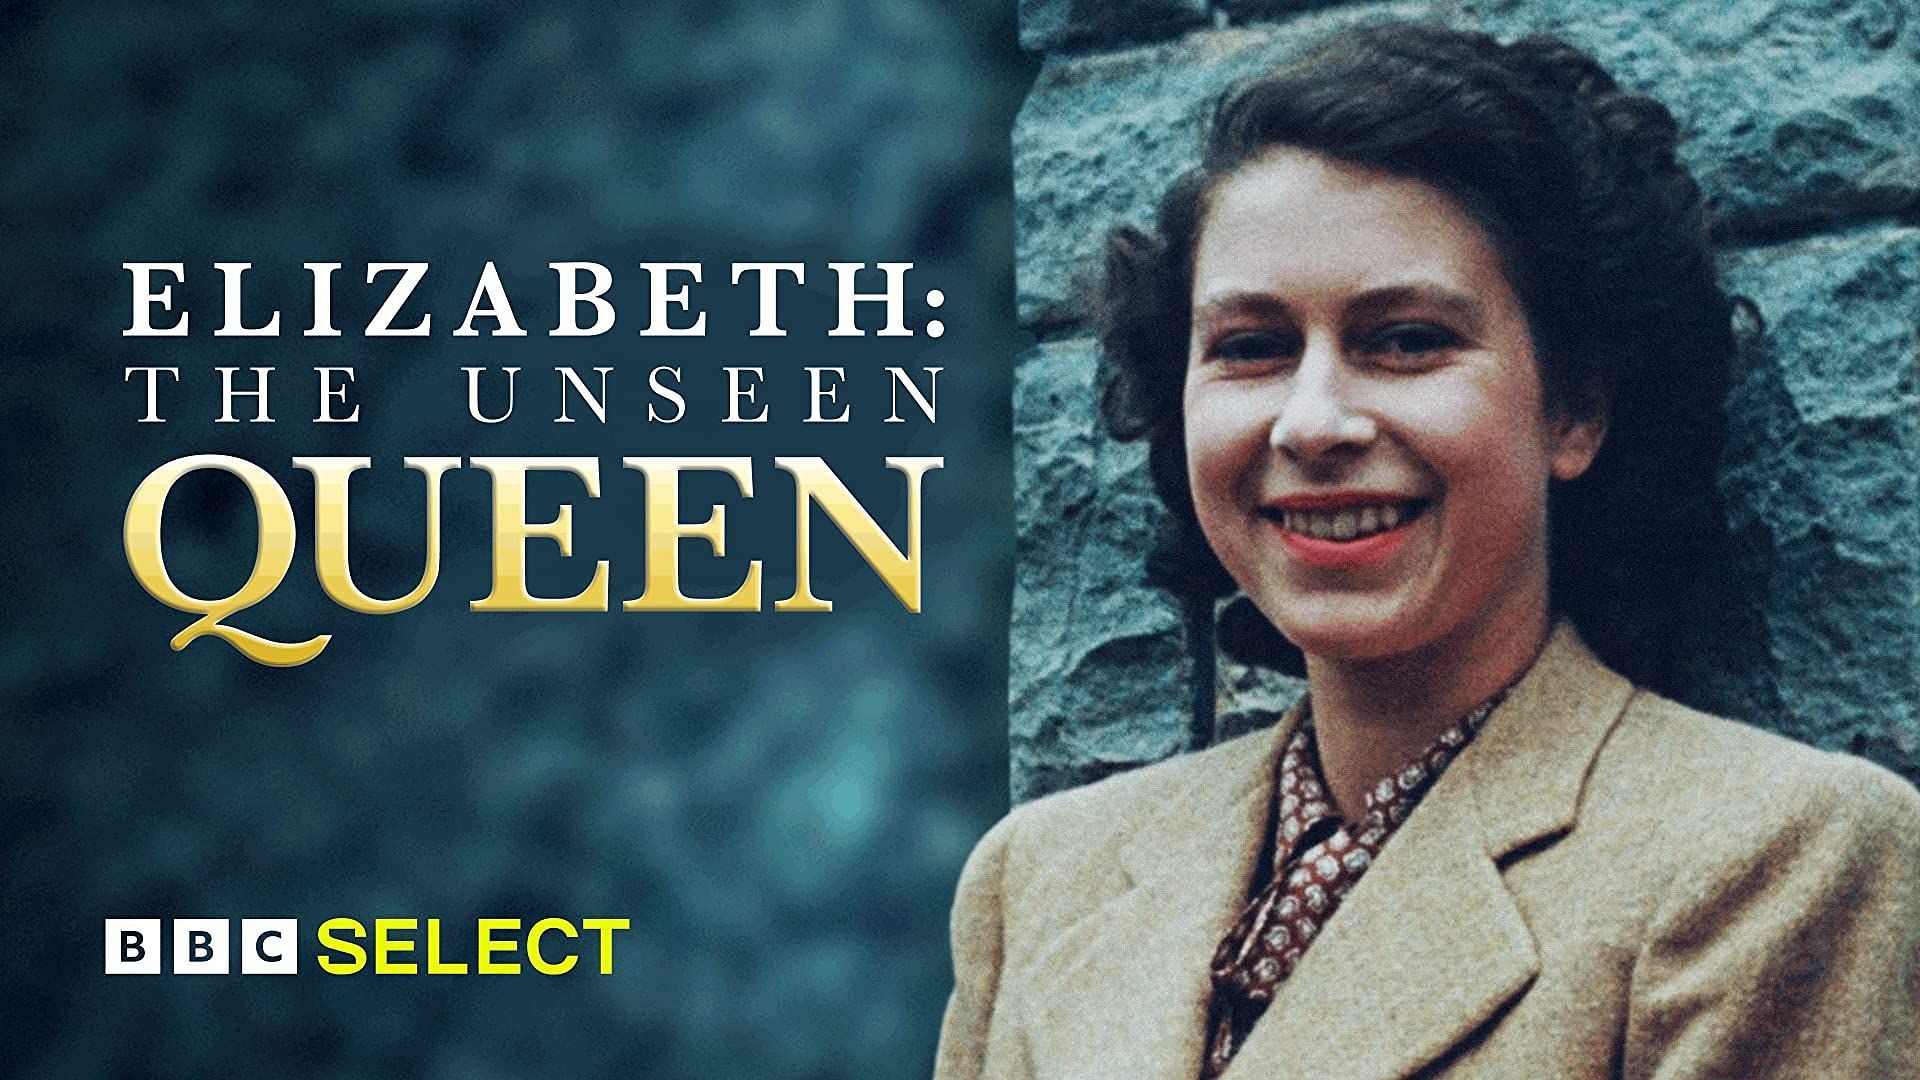 Elizabeth: The Unseen Queen (Image via BBC)